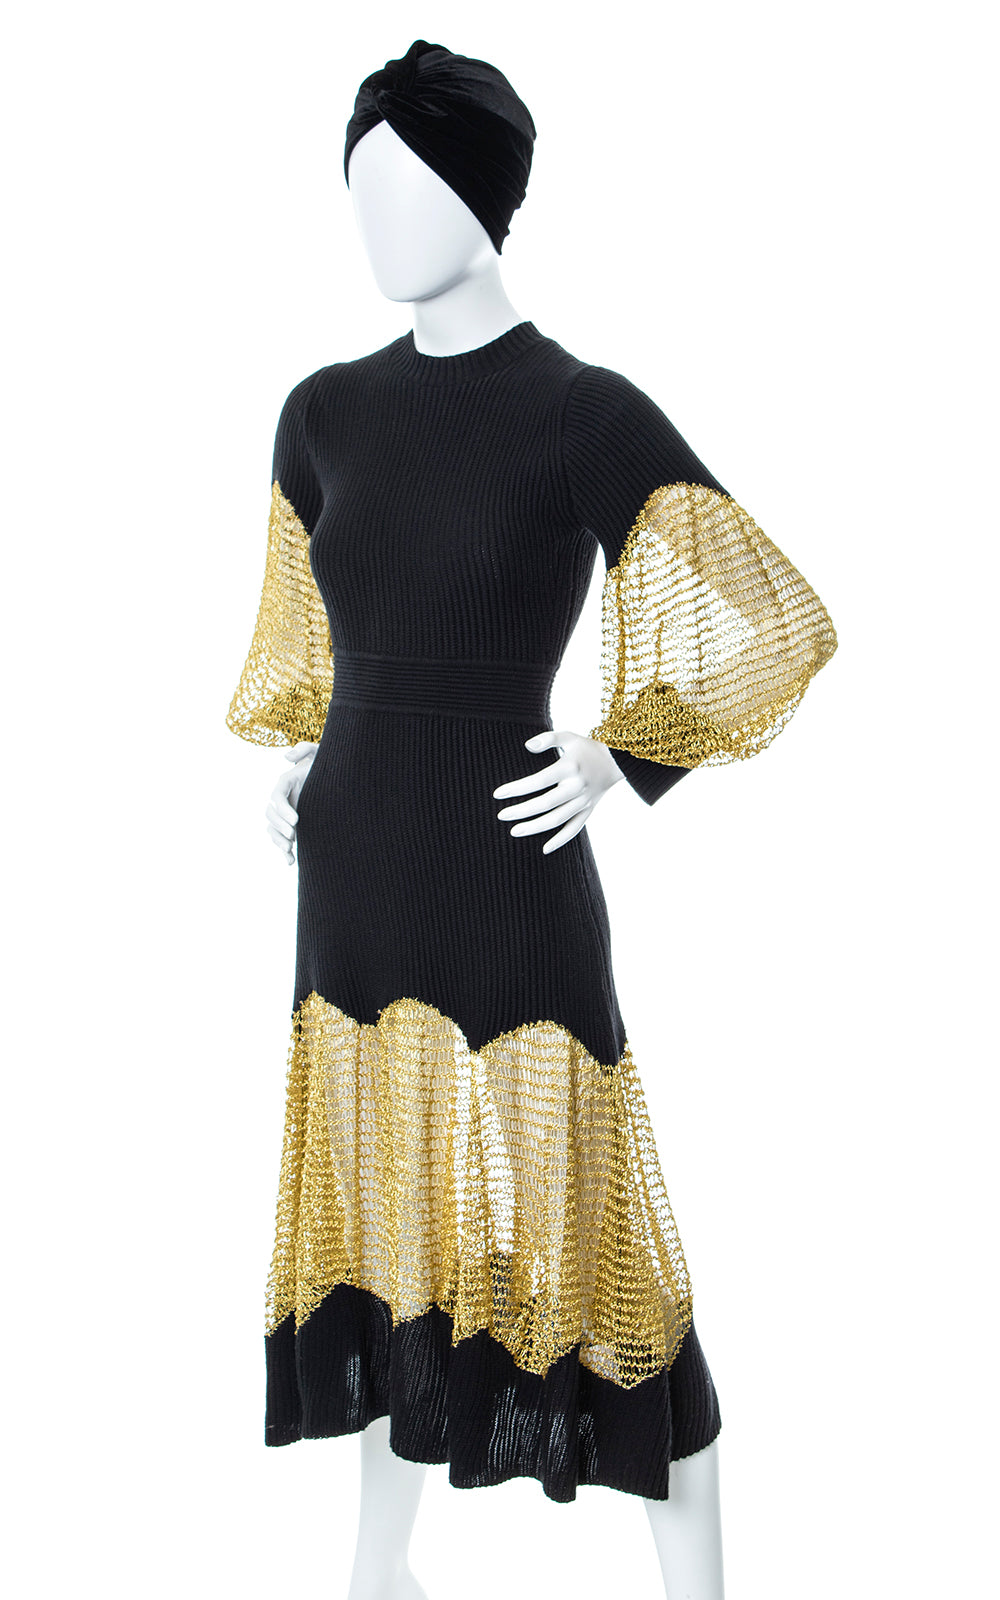 Modern 1930s 30s Art Deco Inspired Metallic Gold & Black Knit Dress Birthday Life Vintage